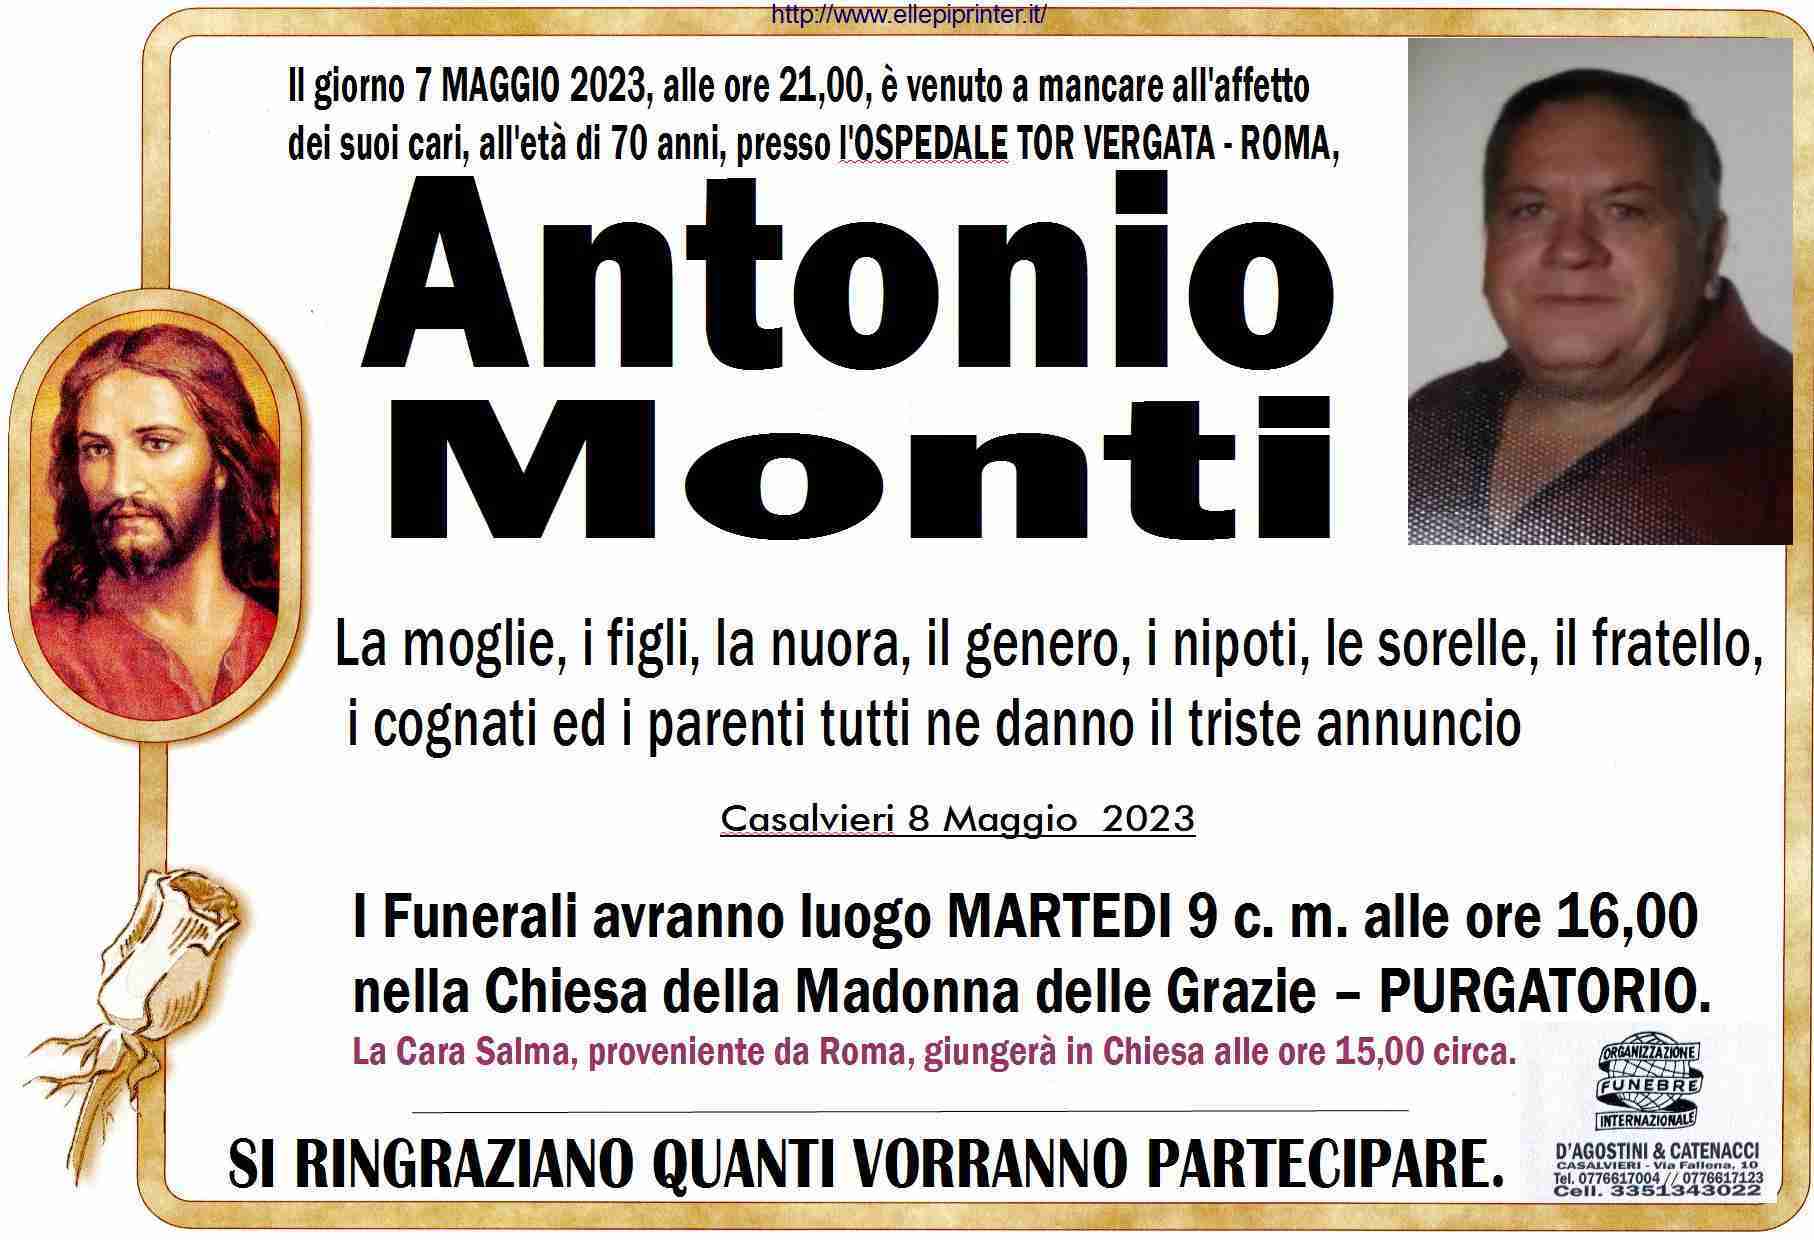 Antonio Monti